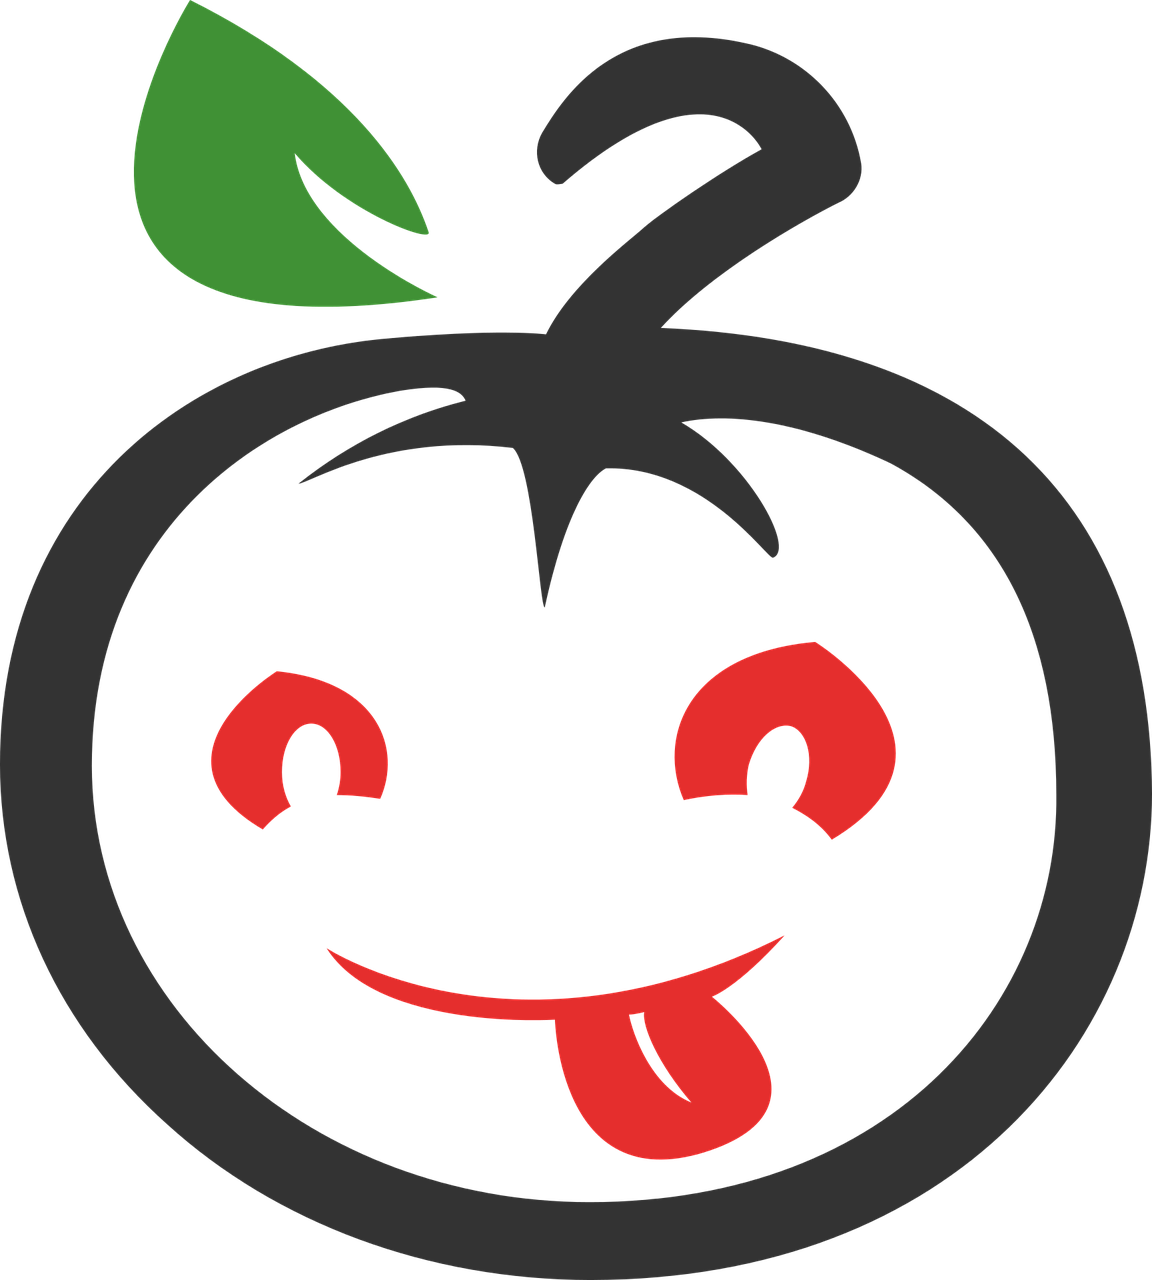 pictogram vegetable tomato free photo